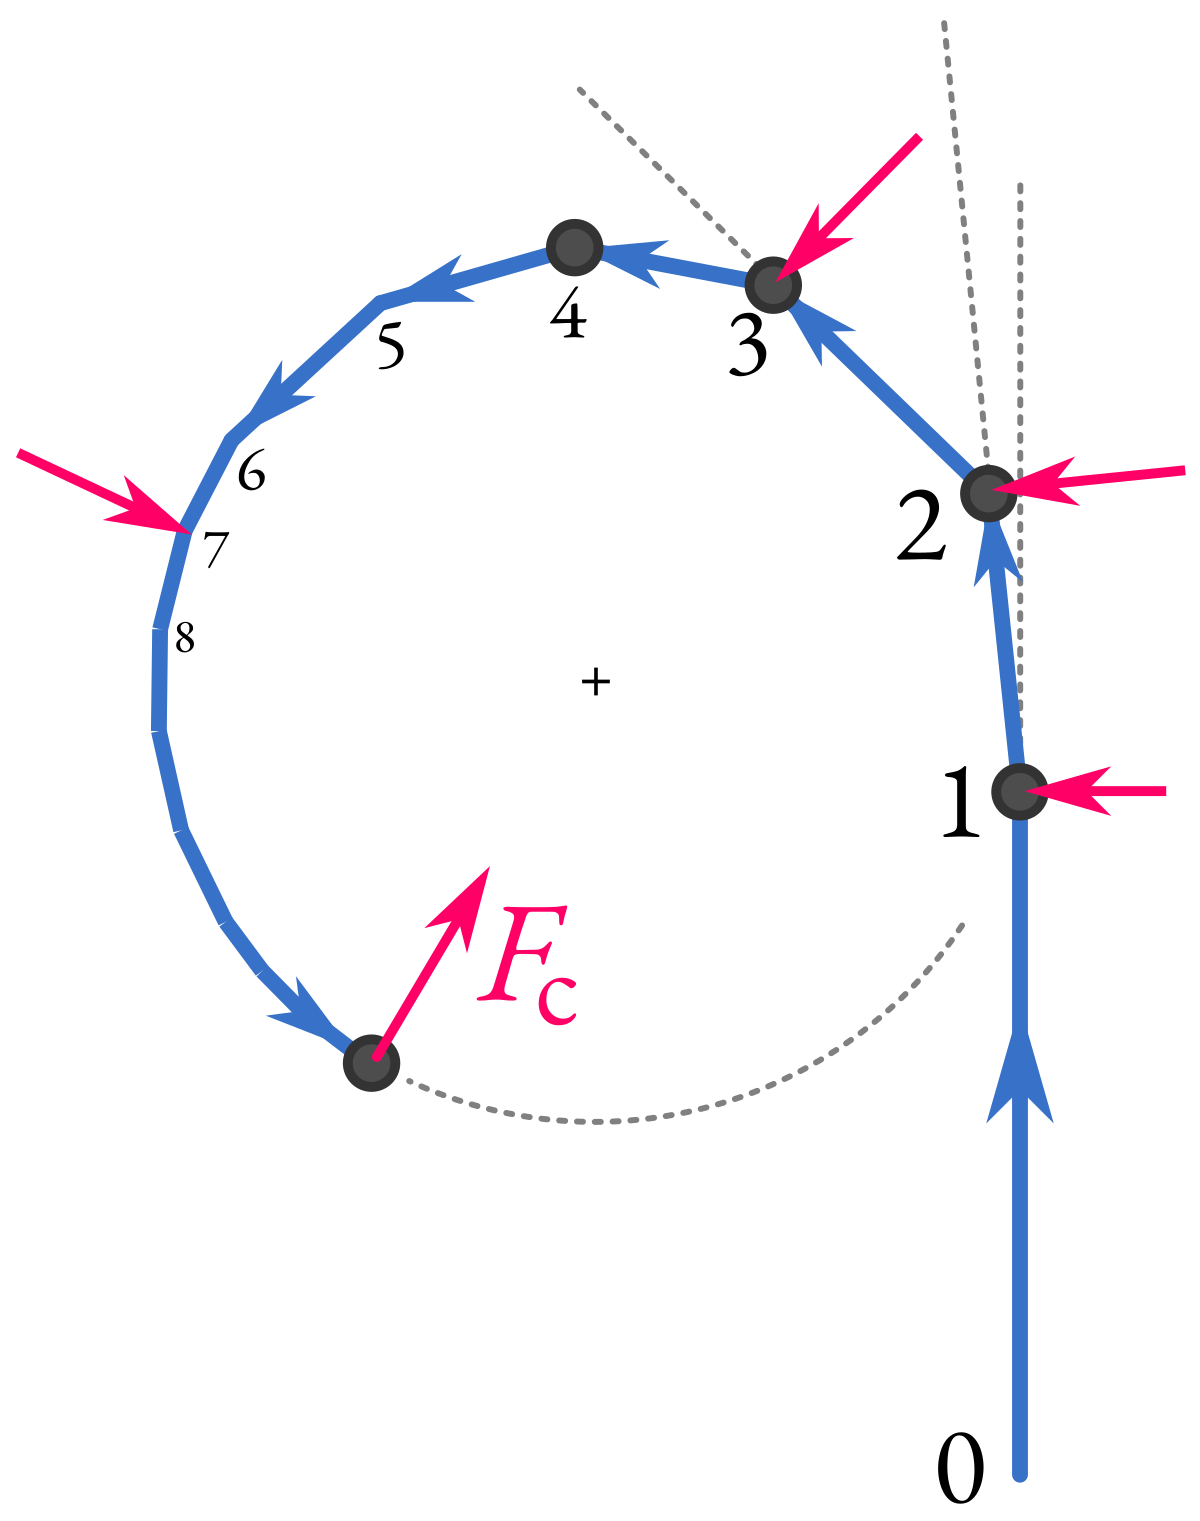 centripetal acceleration definition